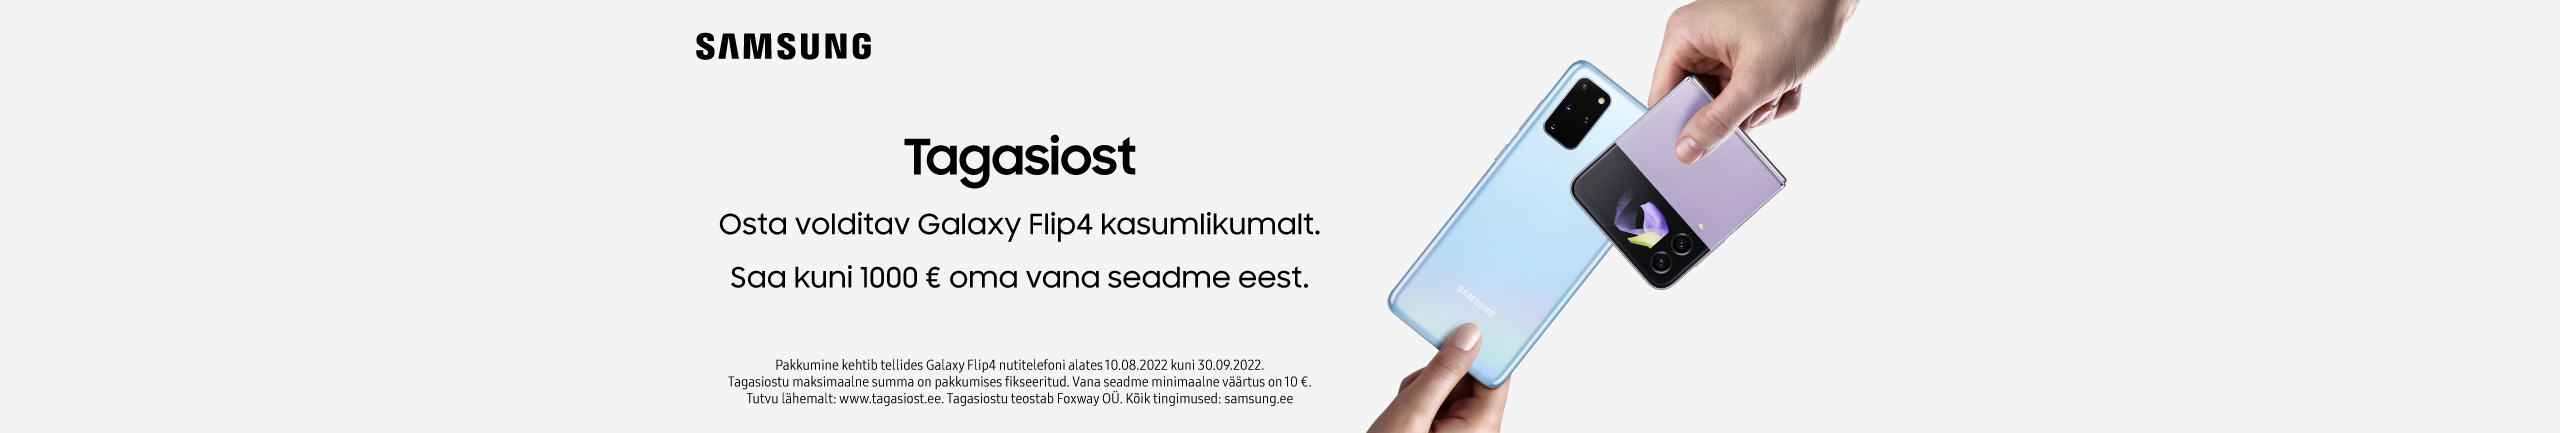 Samsung Galaxy tagasiostukampaania